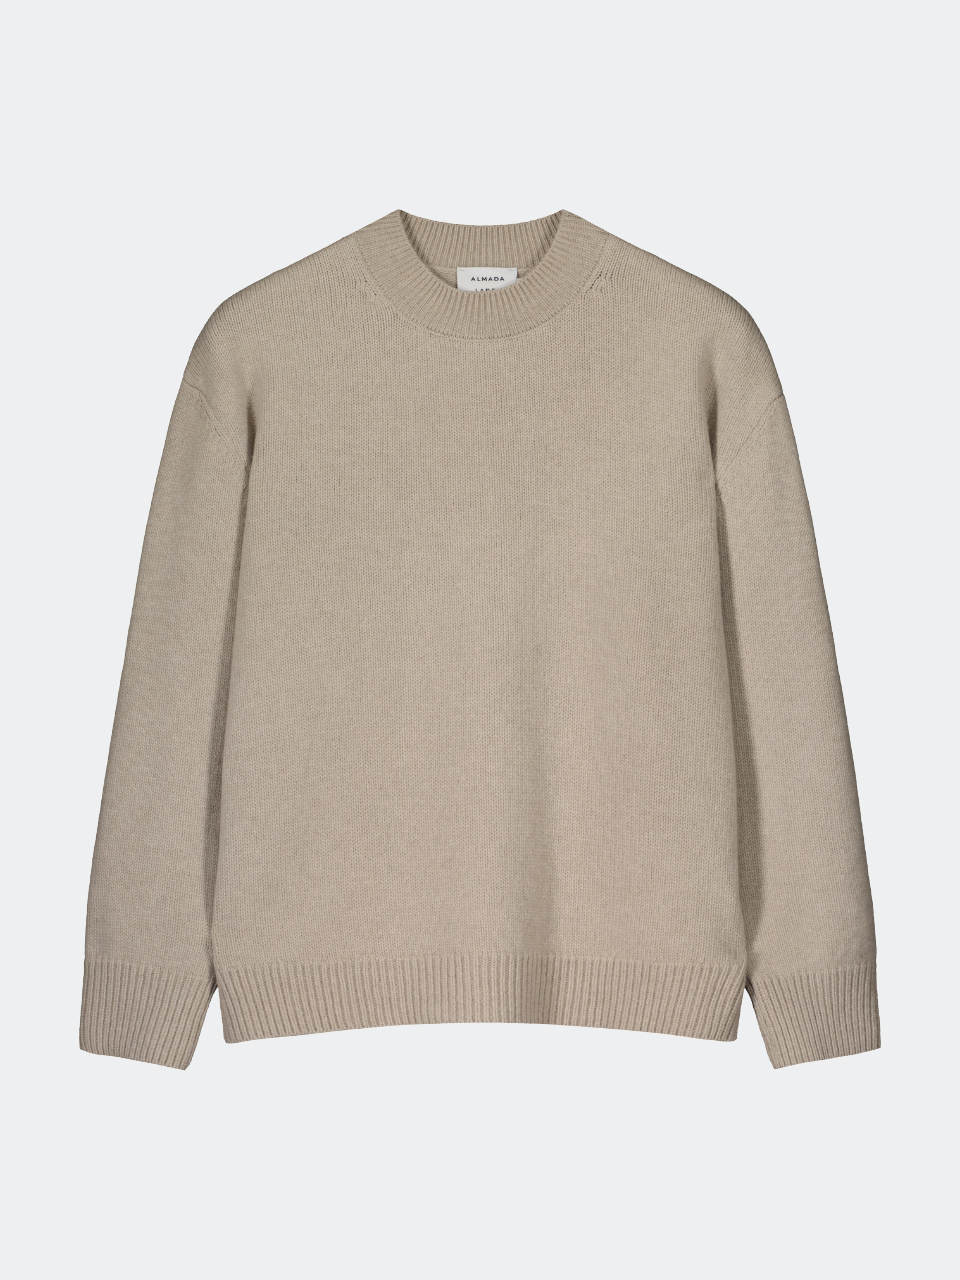 Almada Label - Flo Turtleneck Sweater